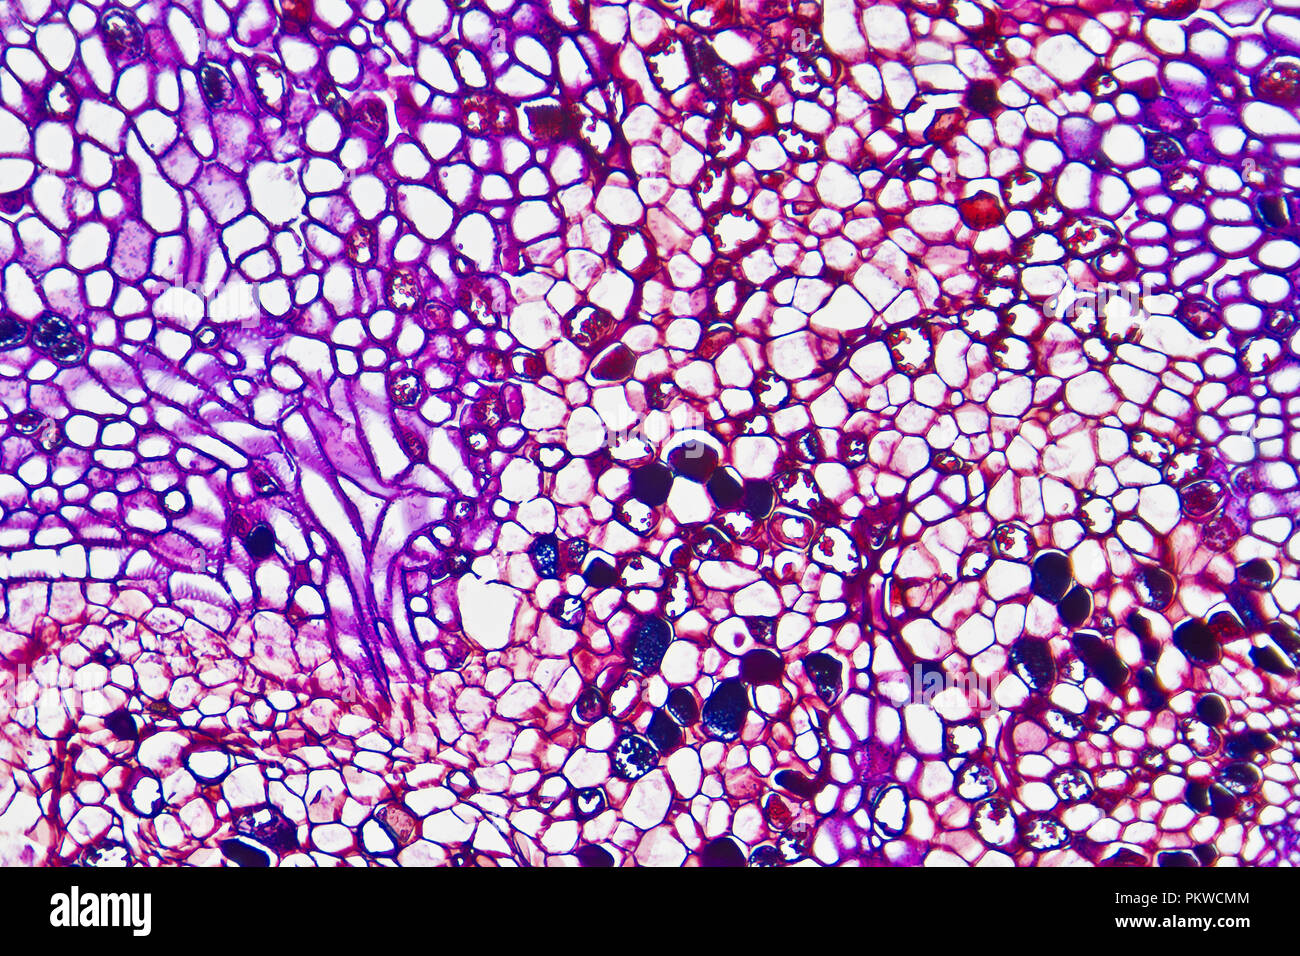 Micro photo of Crown gall, plant disease, caused by the bacterium Agrobacterium tumefaciens.(Rhizobium radiobacte) Stock Photo